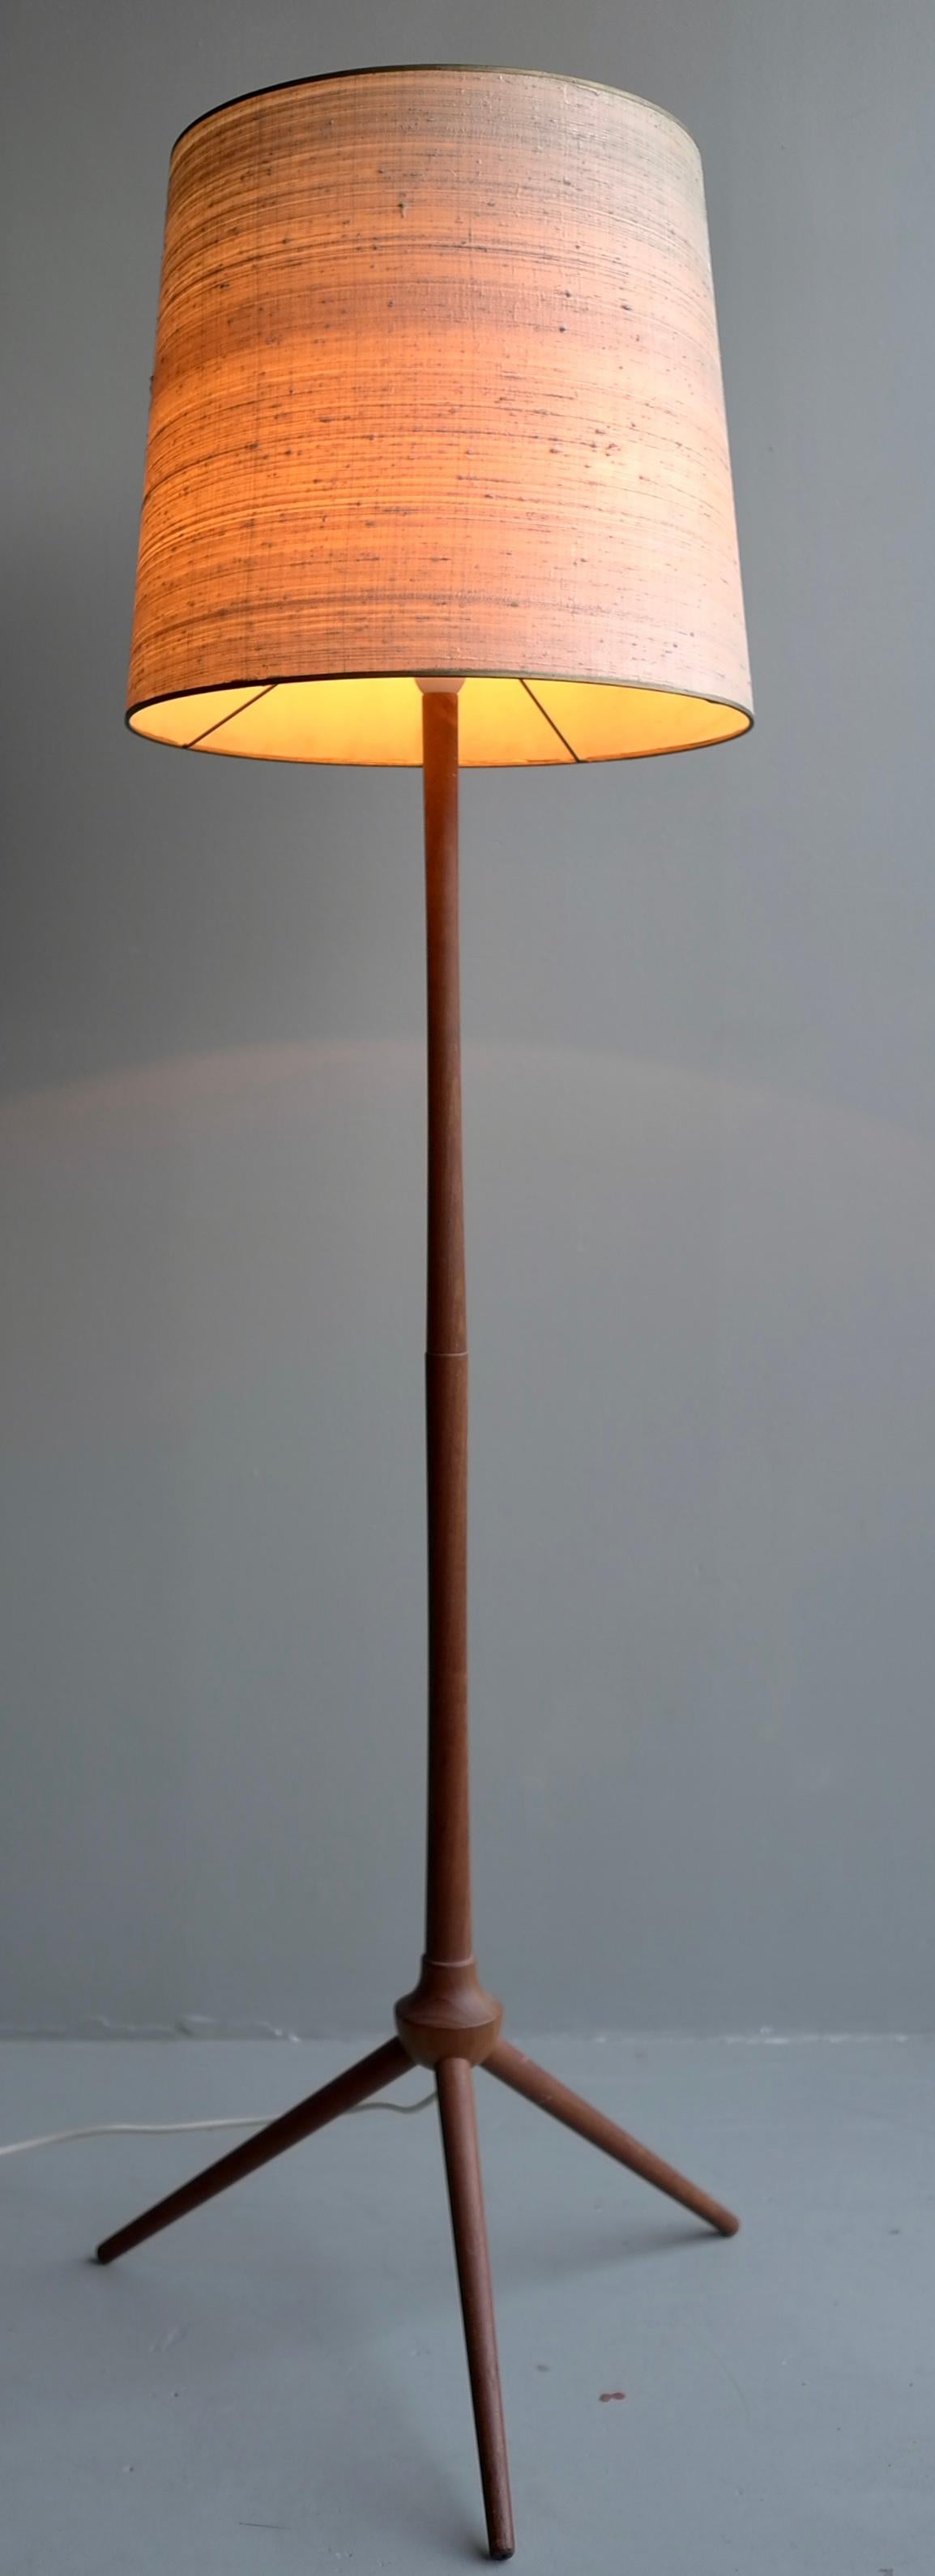 Midcentury teak wooden tripod floorlamp with silk shade, Denmark, 1960s.

Measures: Height137 cm, diameter shade: 38cm x 38cm.